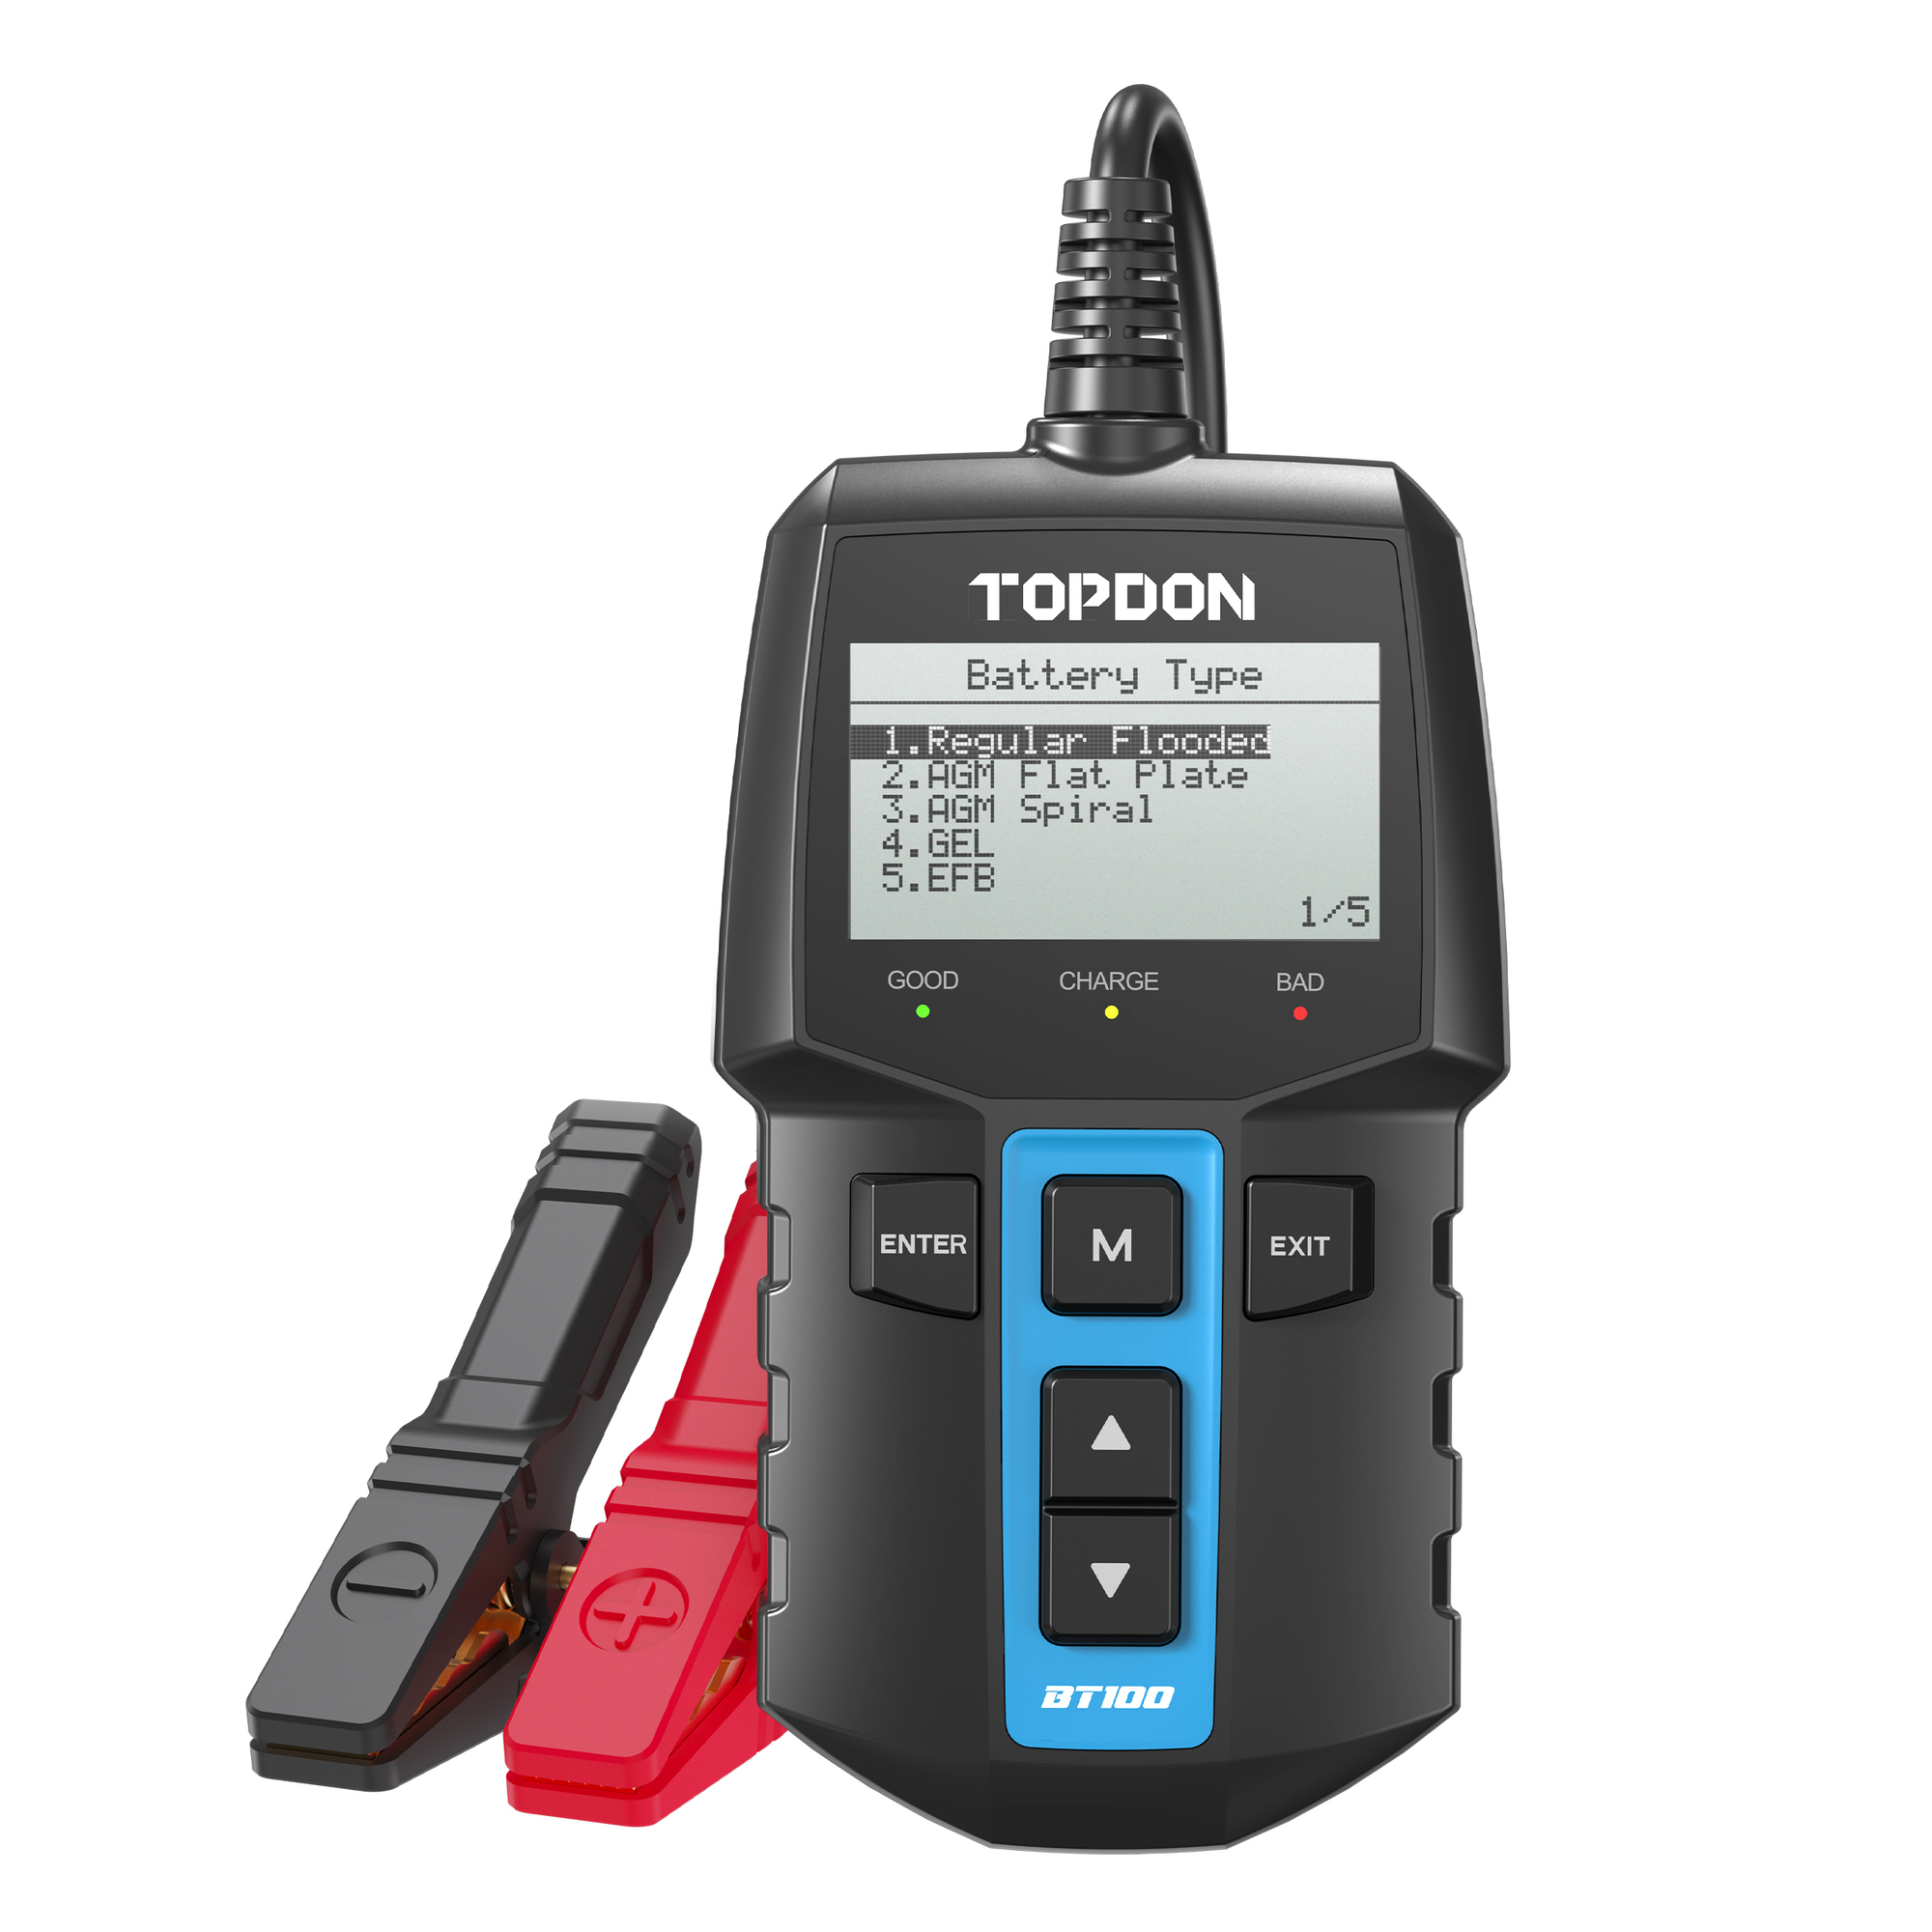 TOPDON, Battery Analyzer and Charging System Tester for 12V Batteries, Model BT100